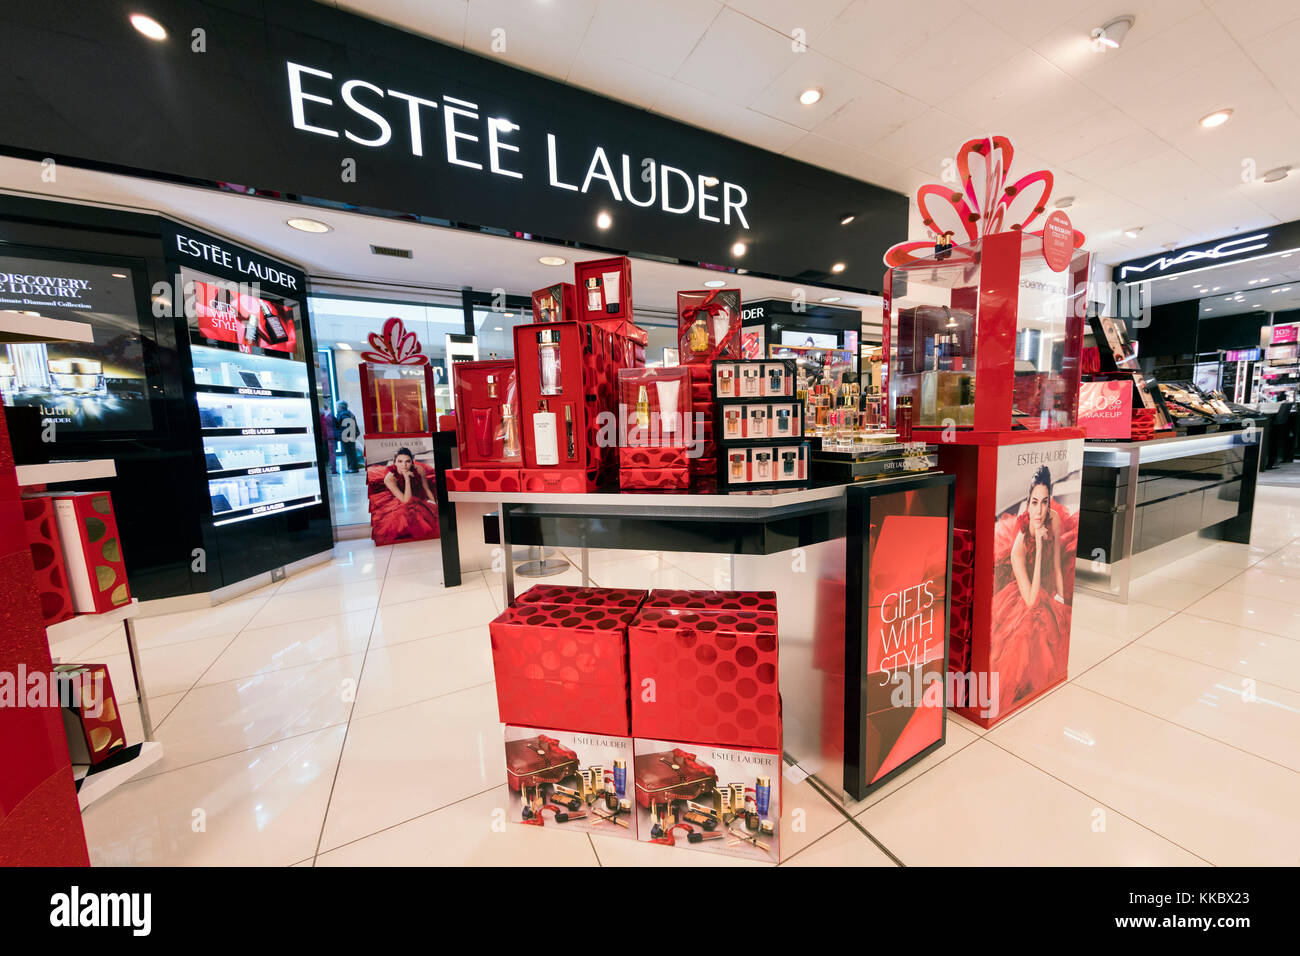 Estee Lauder Counter in einem Store, UK. Stockfoto